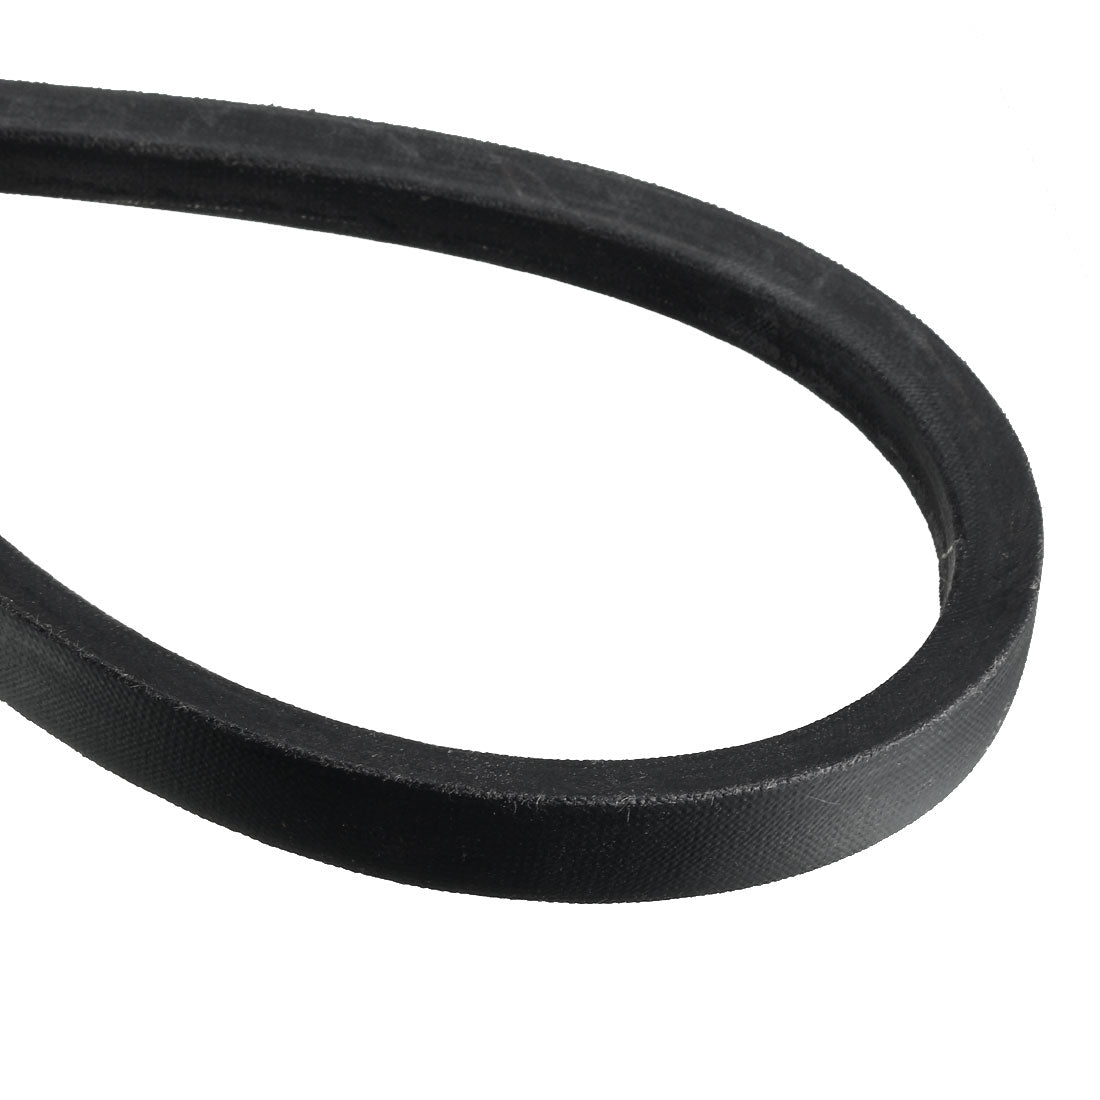 uxcell Uxcell B48 V-Belts 48" Pitch Length, B-Section Rubber Drive Belt 2pcs